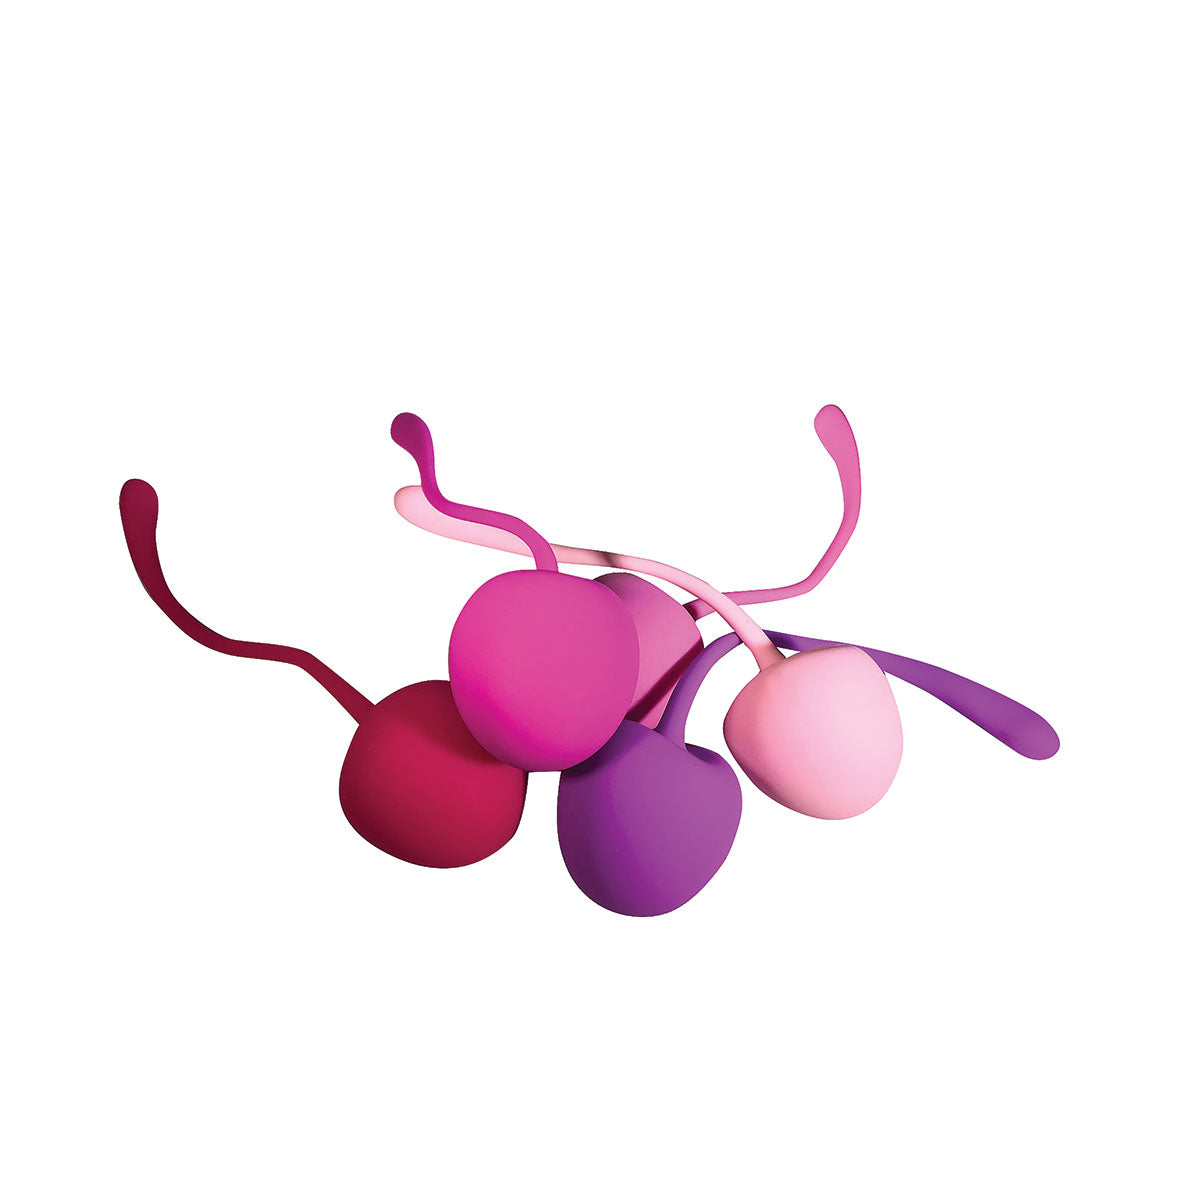 Shibari Cherry Kegel Balls [A03659]